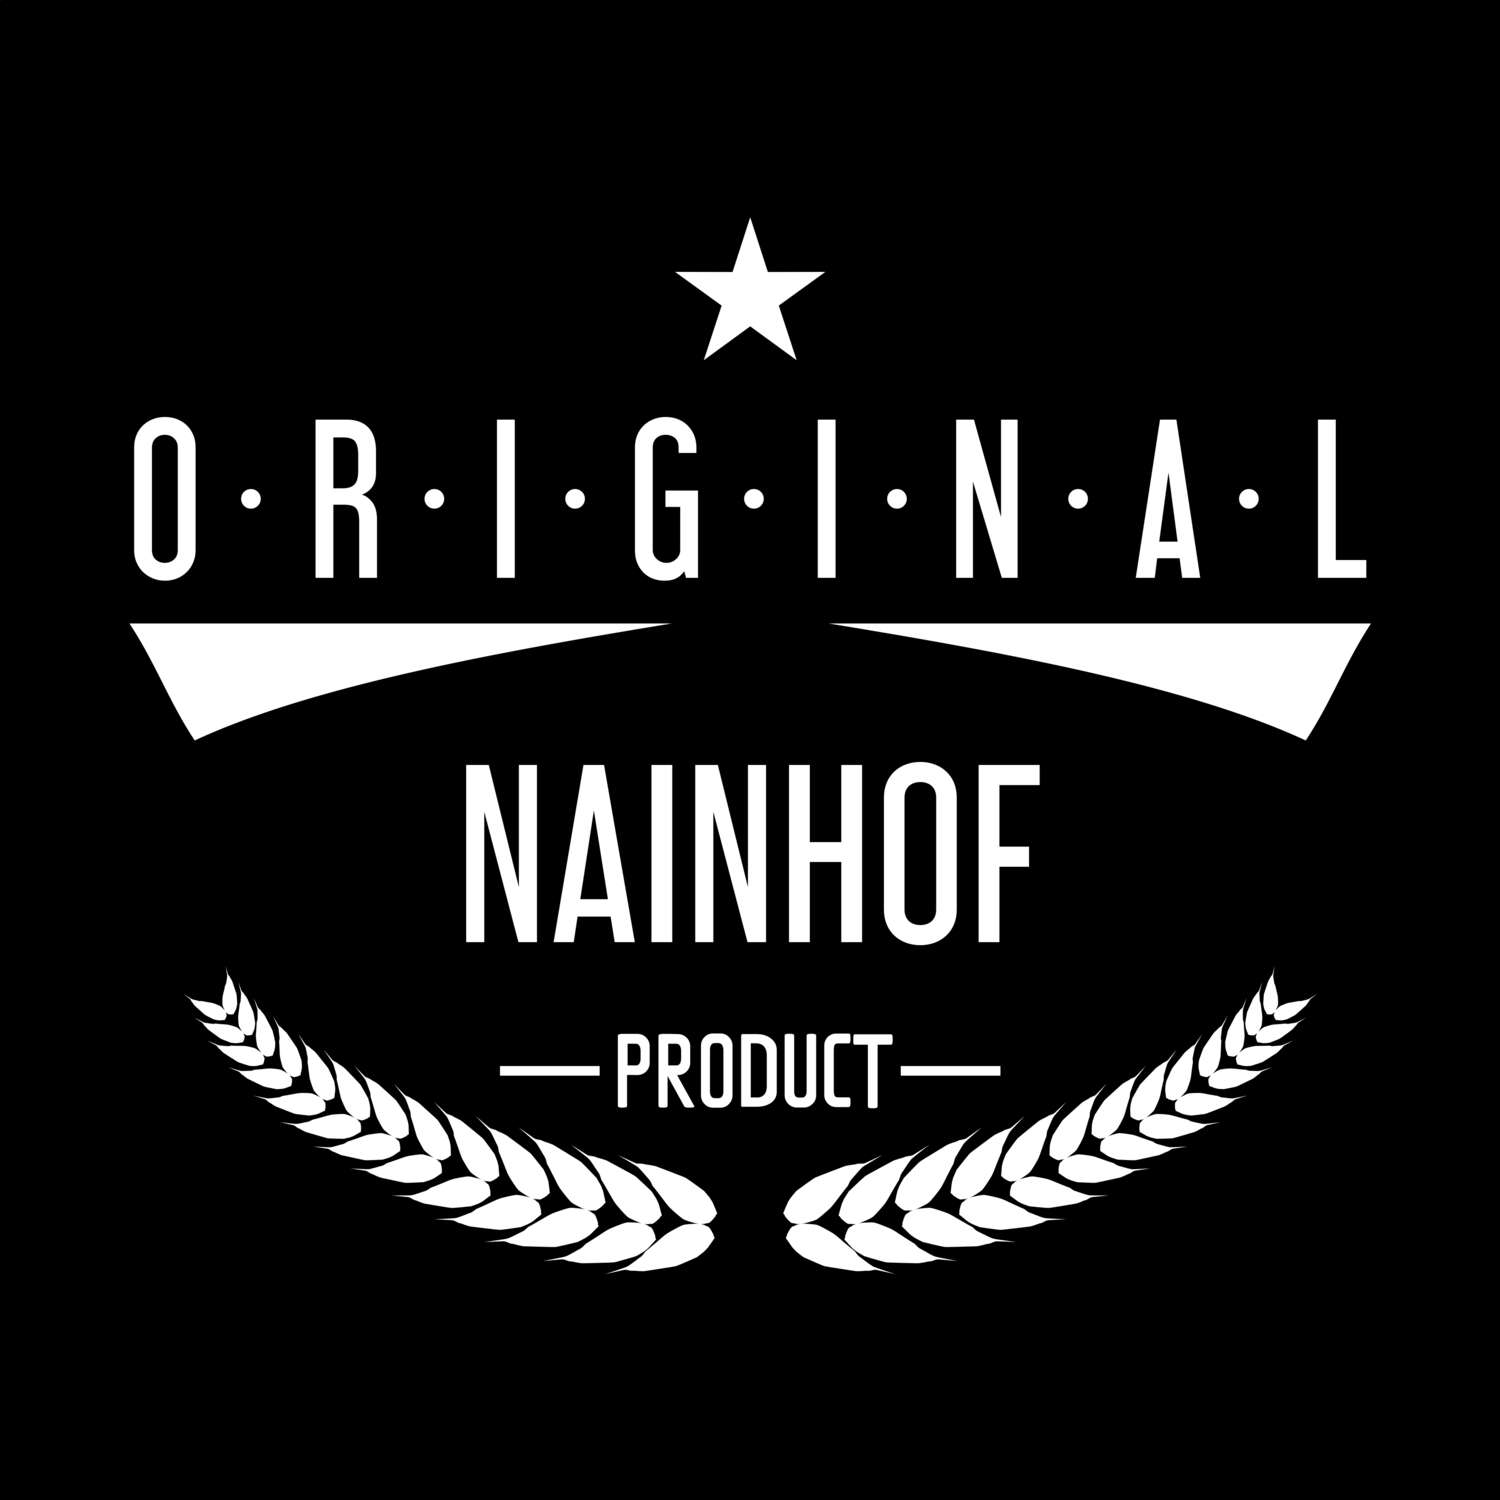 Nainhof T-Shirt »Original Product«